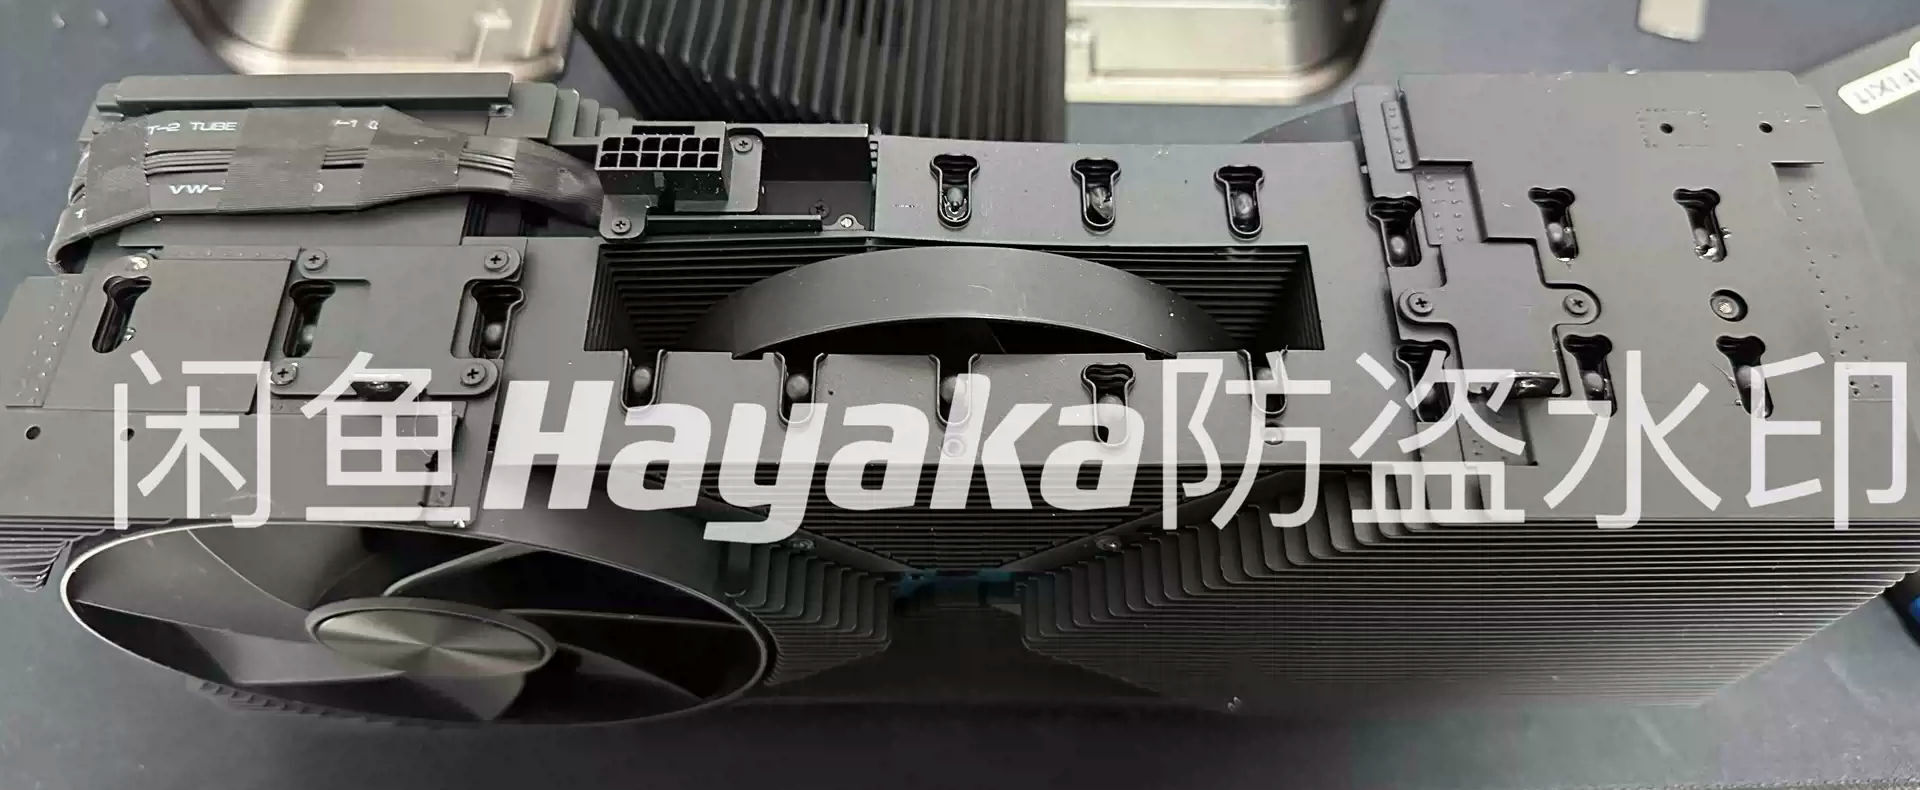 NVIDIA GeForce RTX 4090 Ti Quad-Slot Prototype Cooler Has Hidden Fan